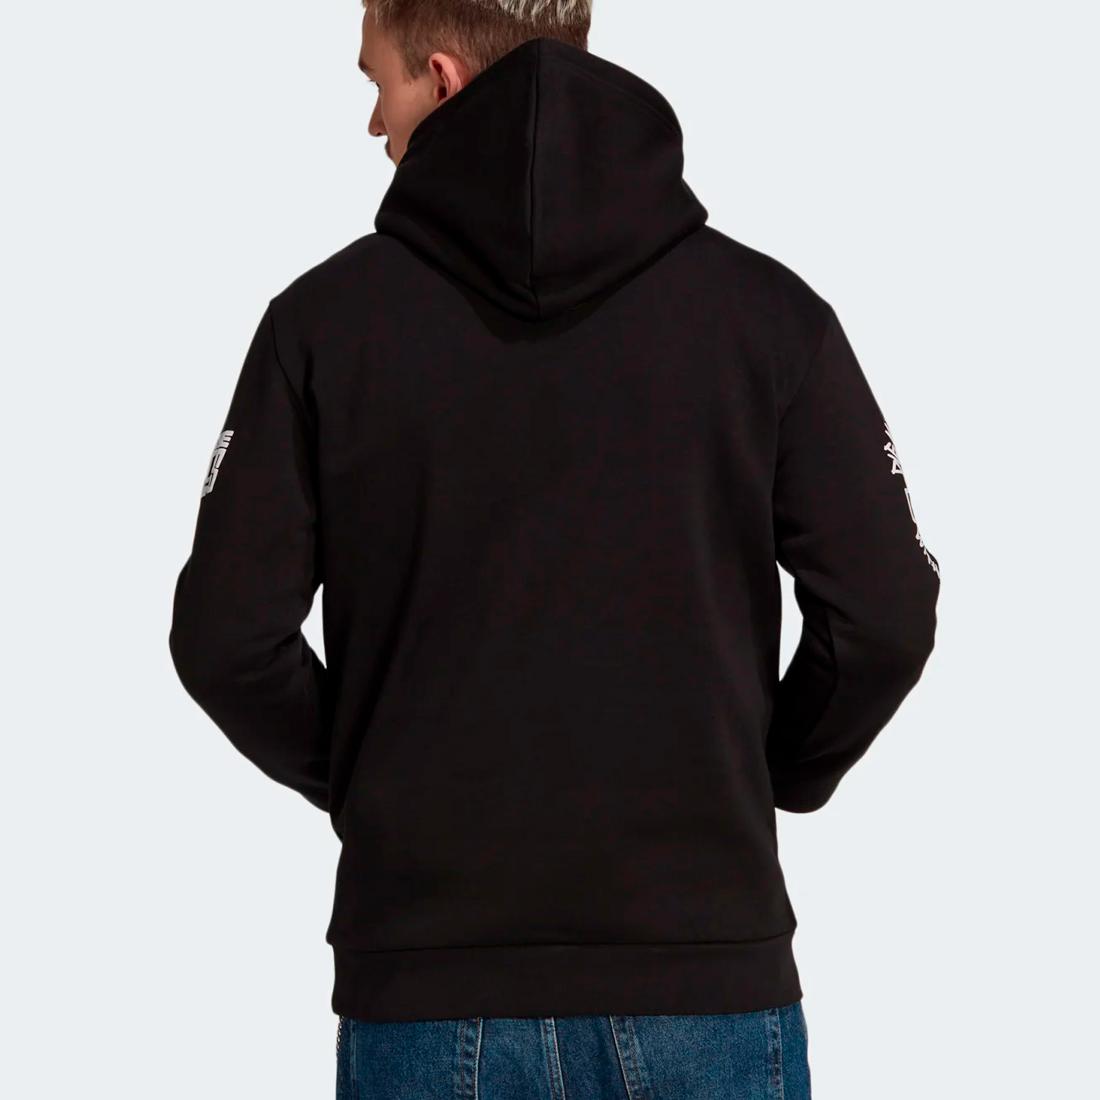 Adidas Unite hoodie black